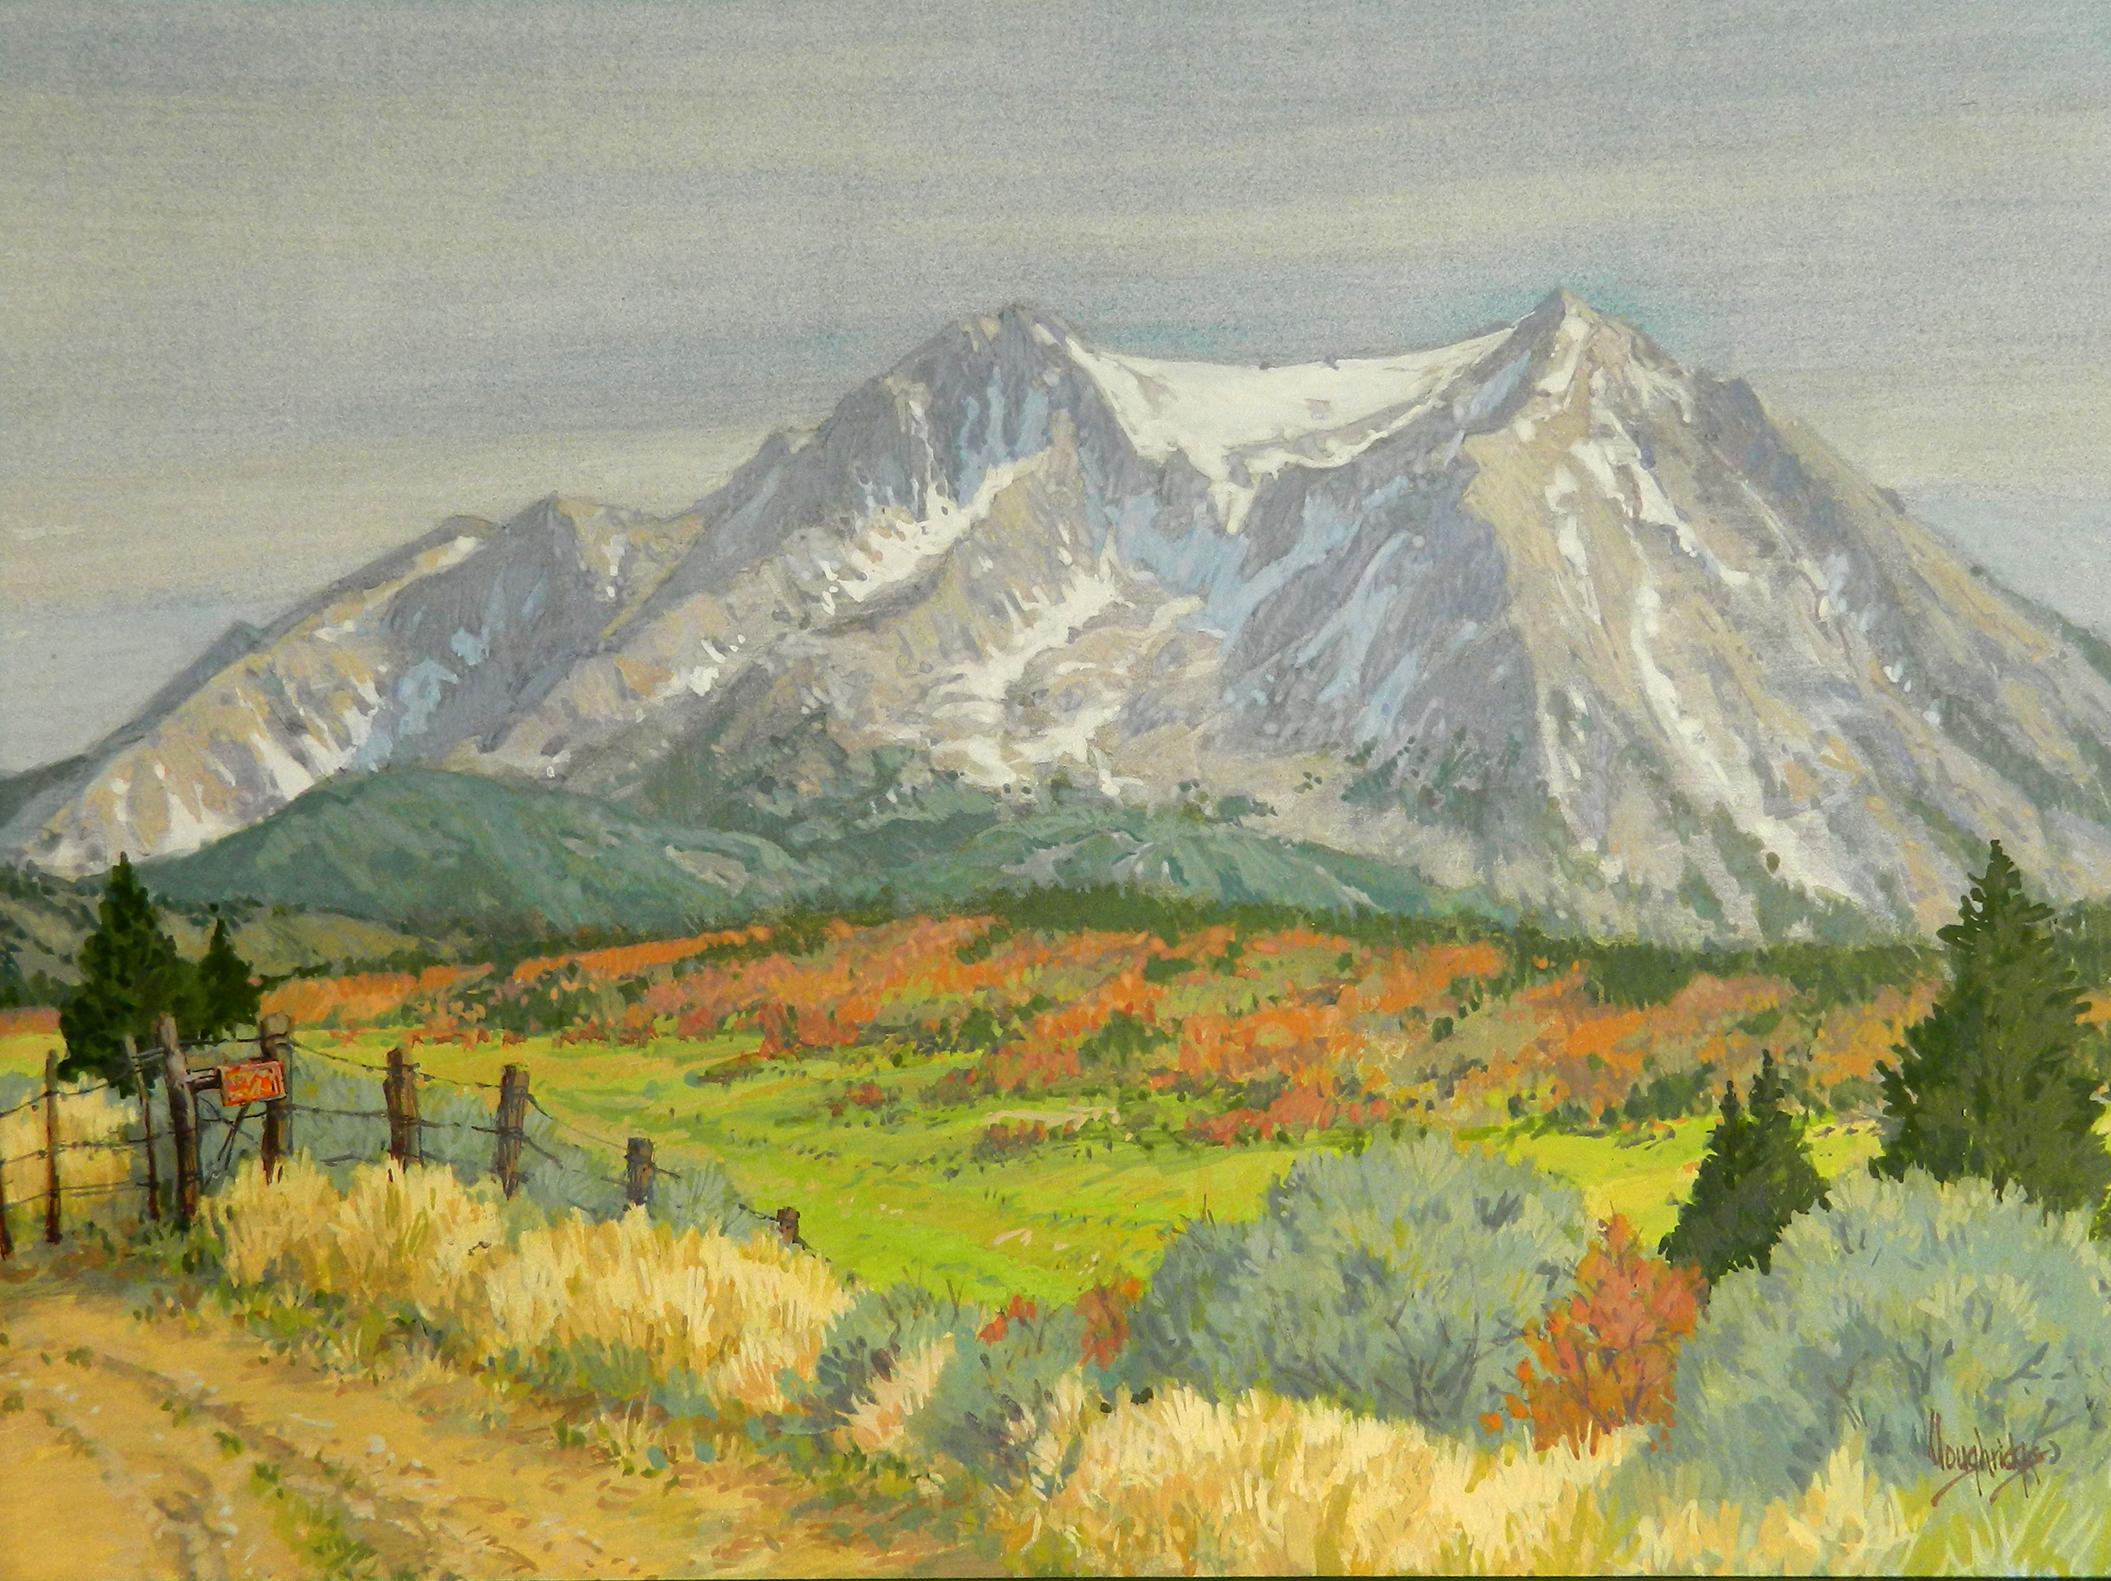 Leon Loughridge Landscape Art - Posted Mt. Sopris (contemporary western landscape watercolor of 14, 000 ft. peak)